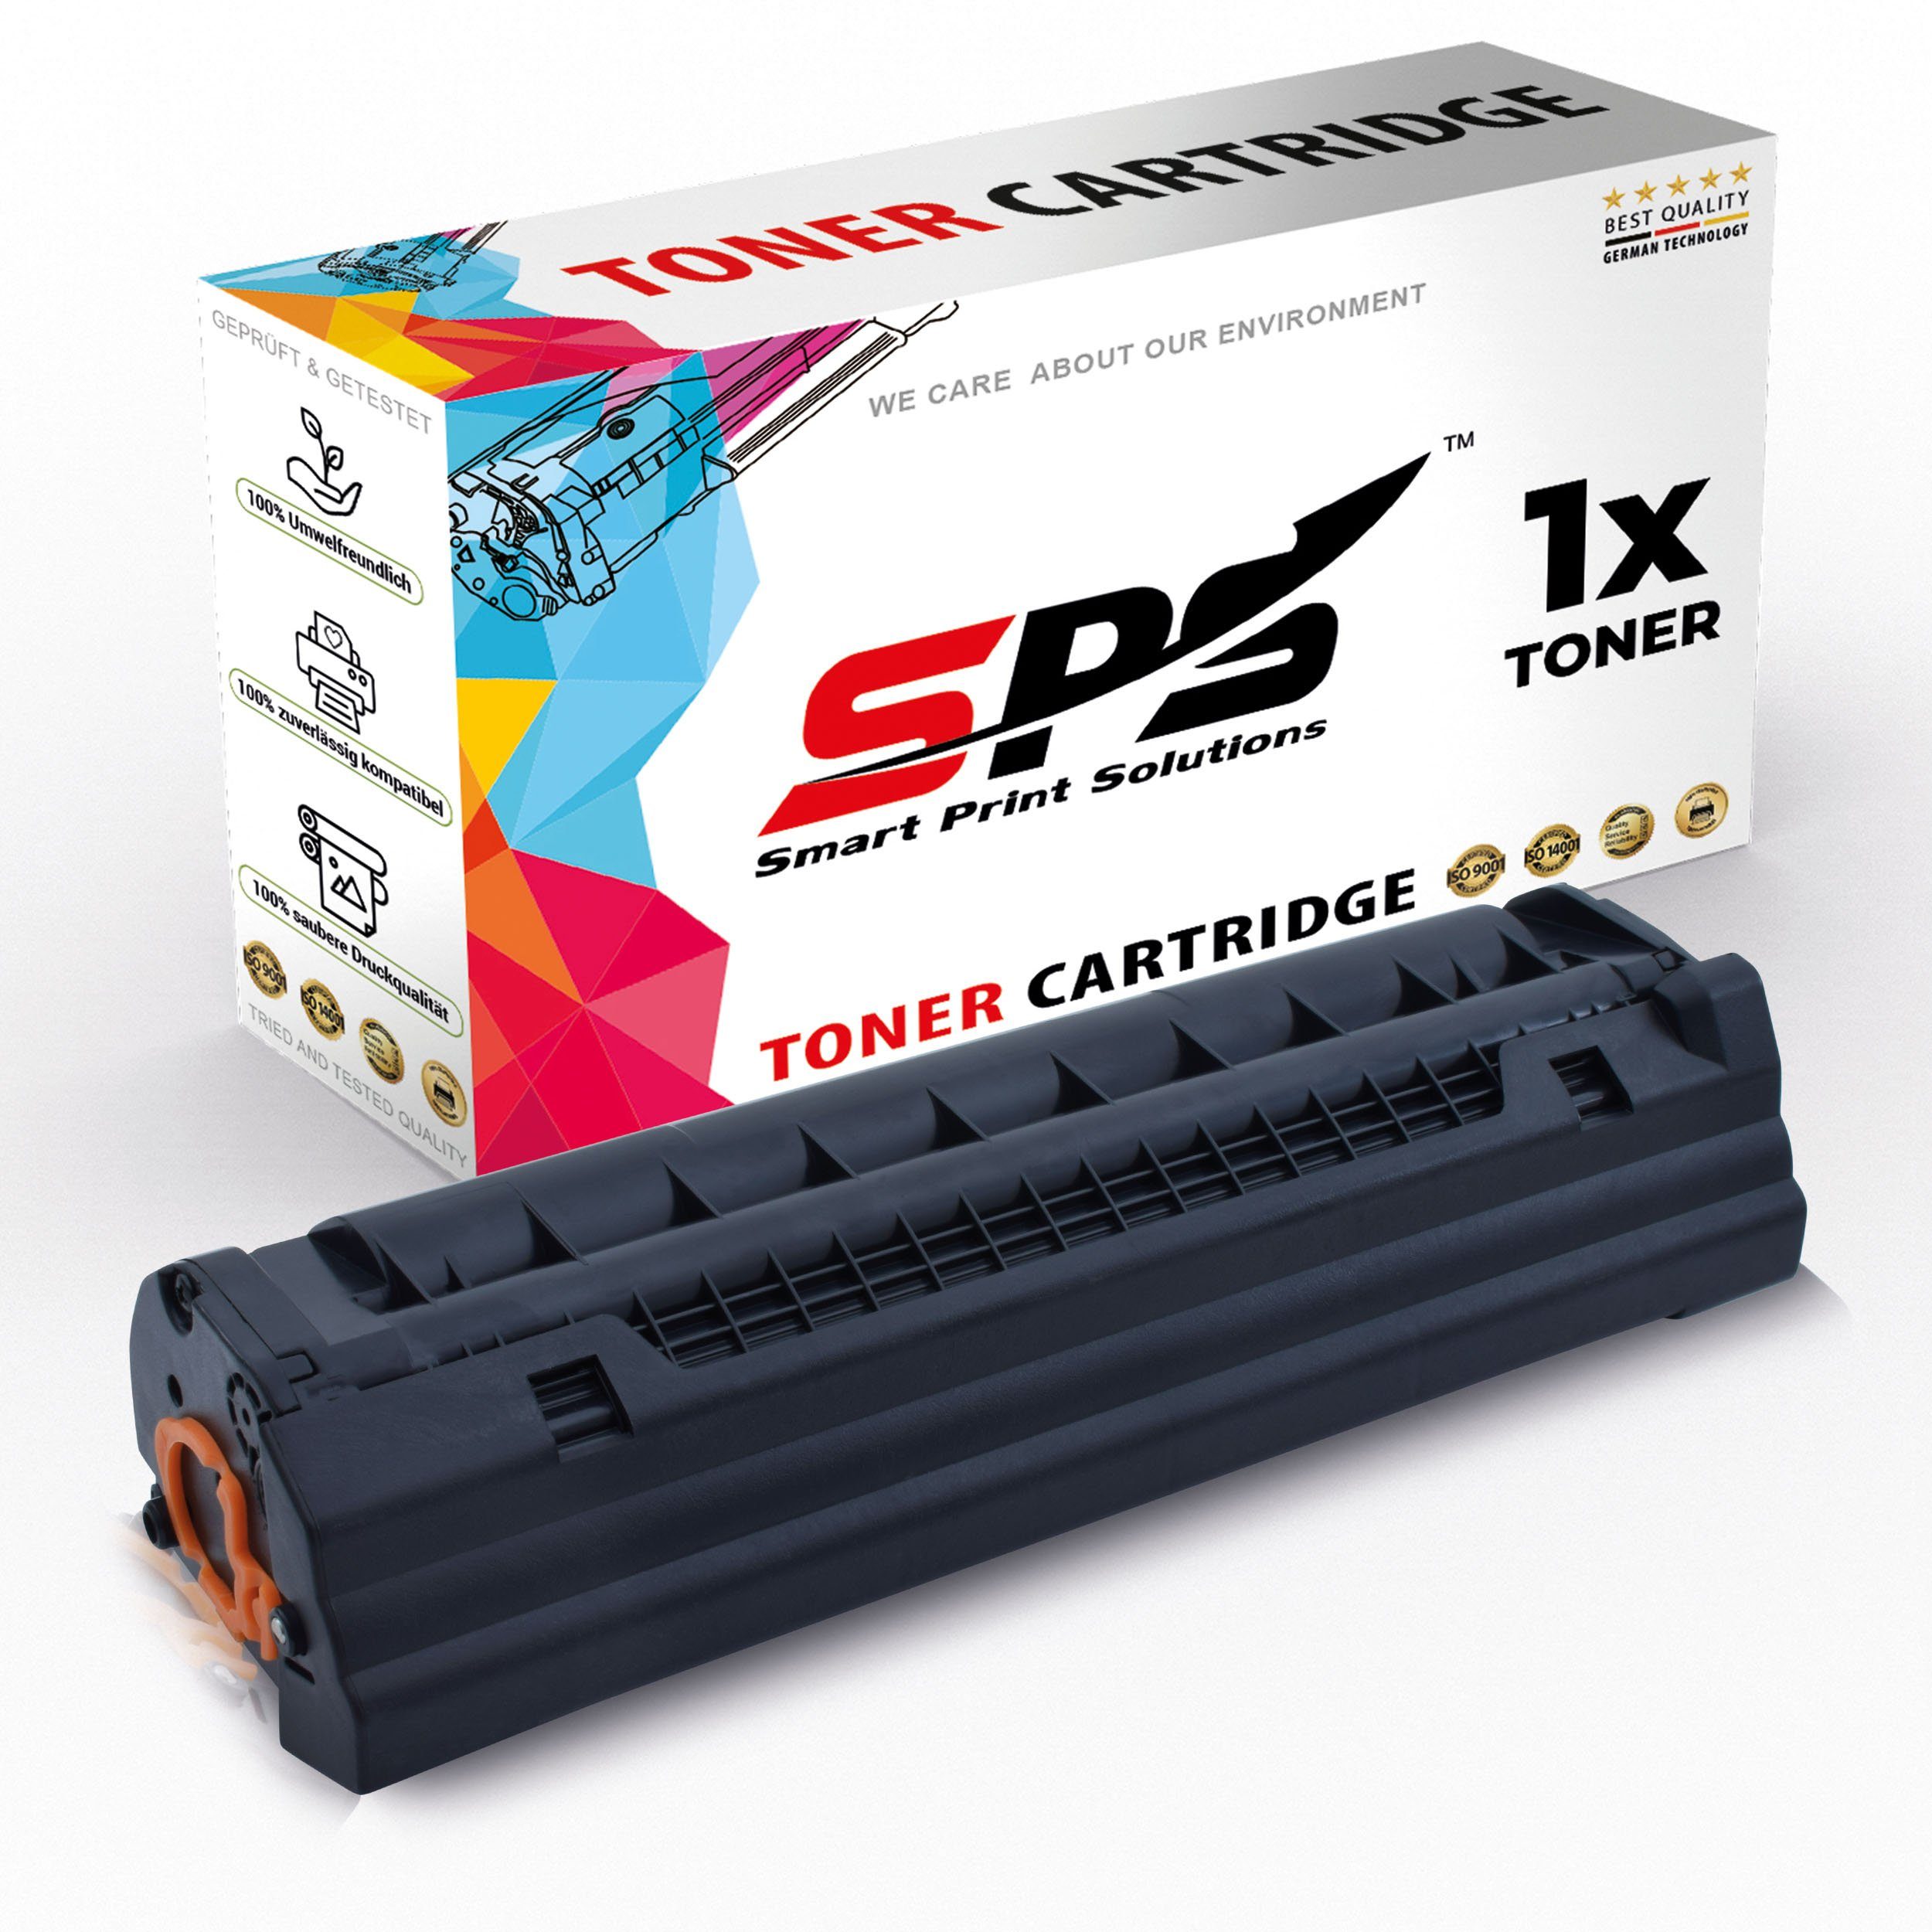 (1er Kompatibel HP W1106A, Tonerkartusche für 106A Pack) SPS 107W Laser